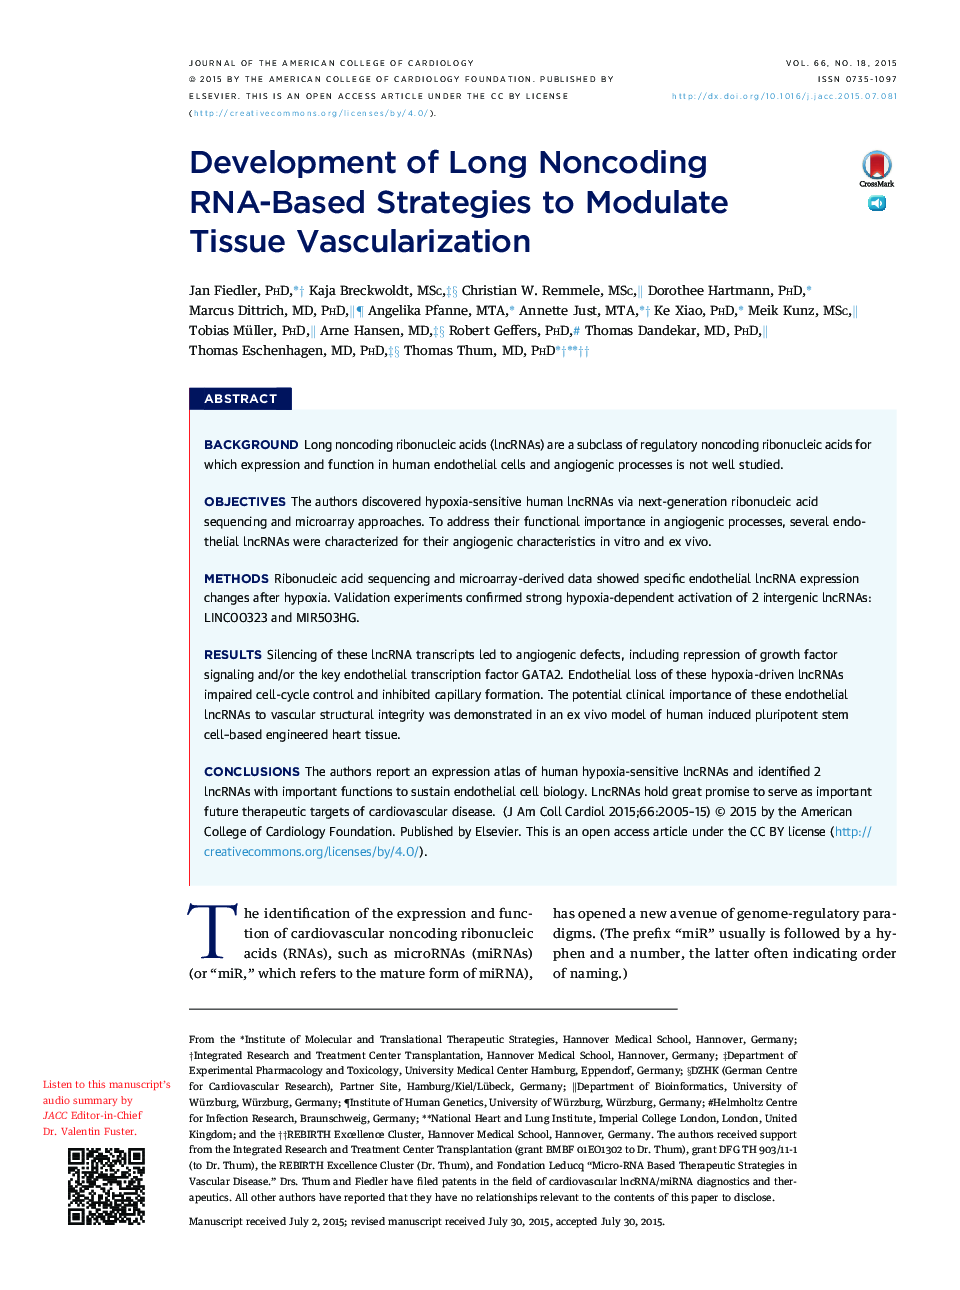 Development of Long Noncoding RNA-Based Strategies to Modulate TissueÂ Vascularization